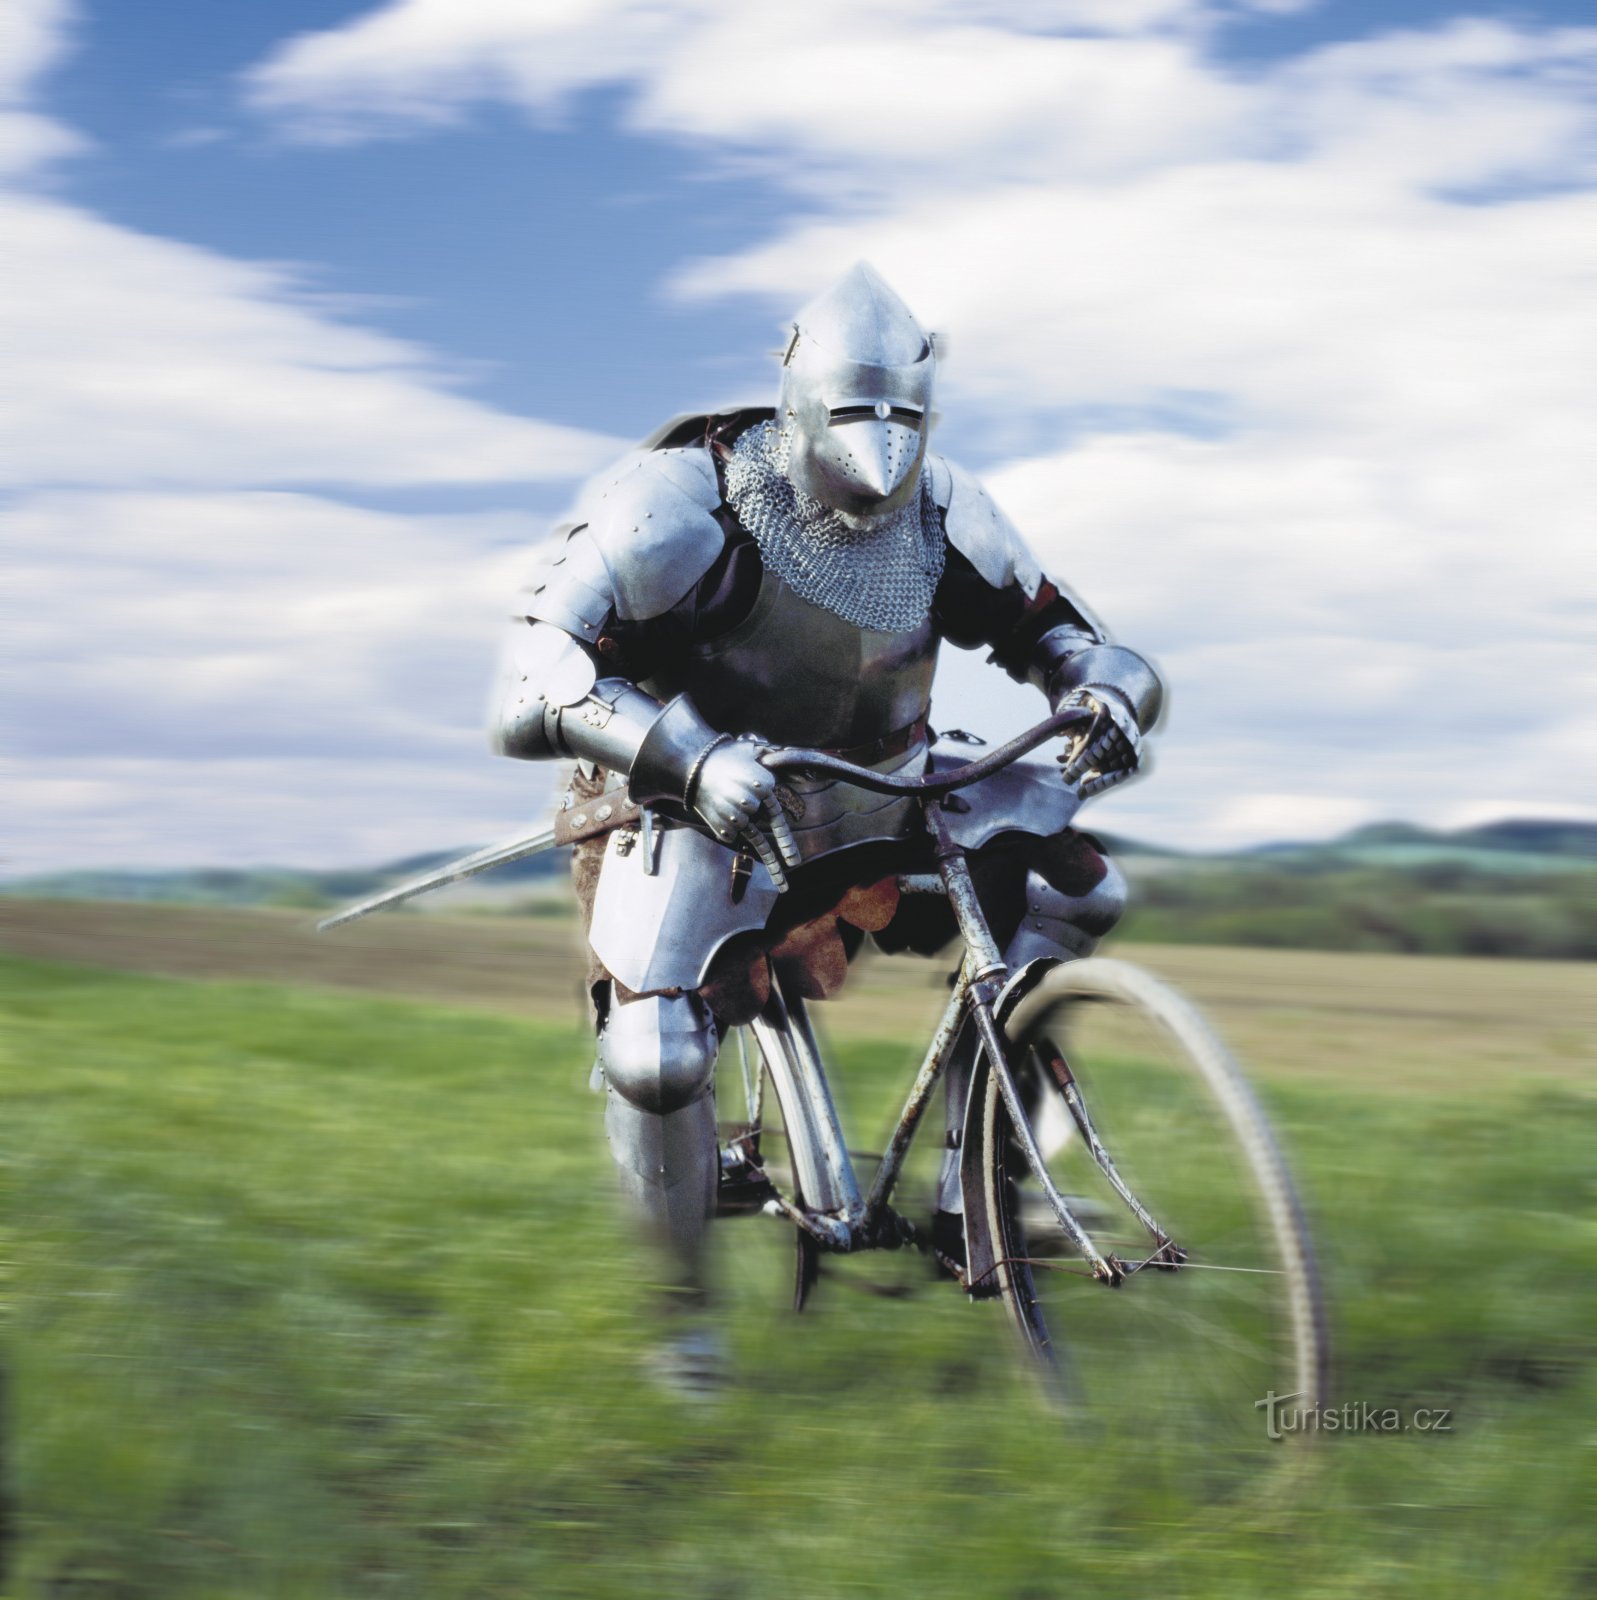 The Blanič cycle knights will ride from Načeradka on Saturday, June 8